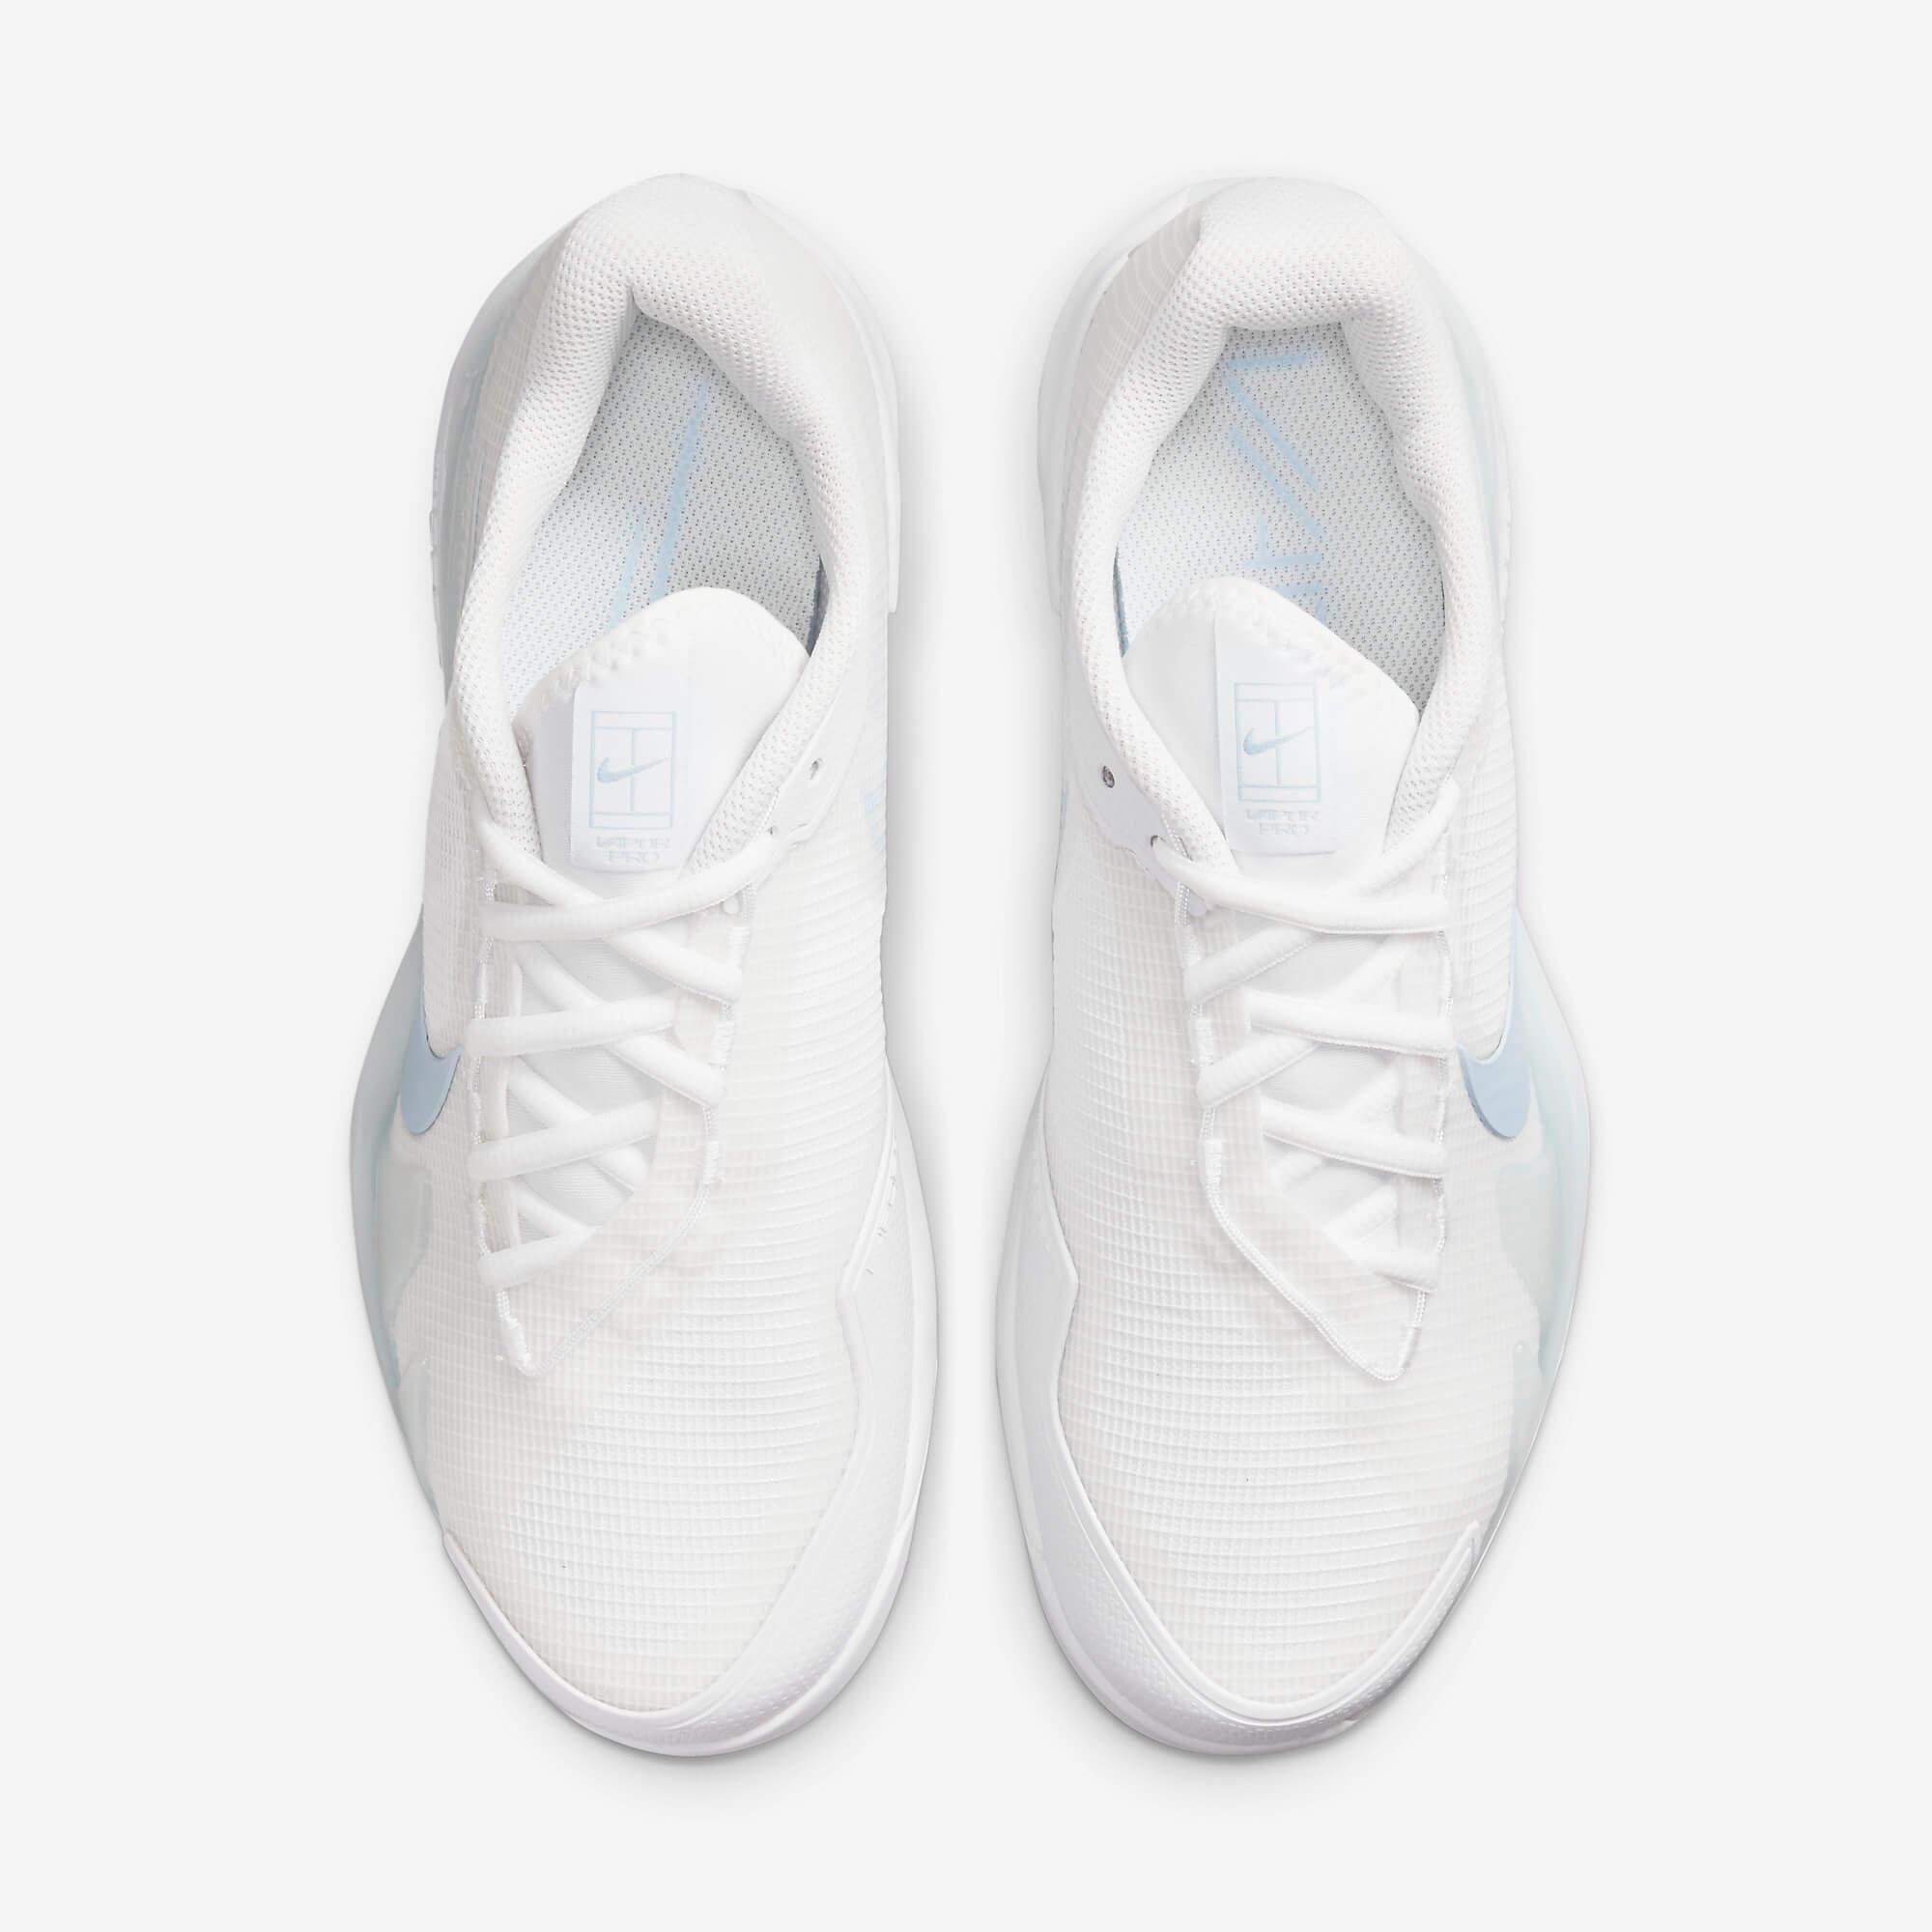 Nike Womens Air Zoom Vapor Pro Tennis Shoes - White/Aluminium ...